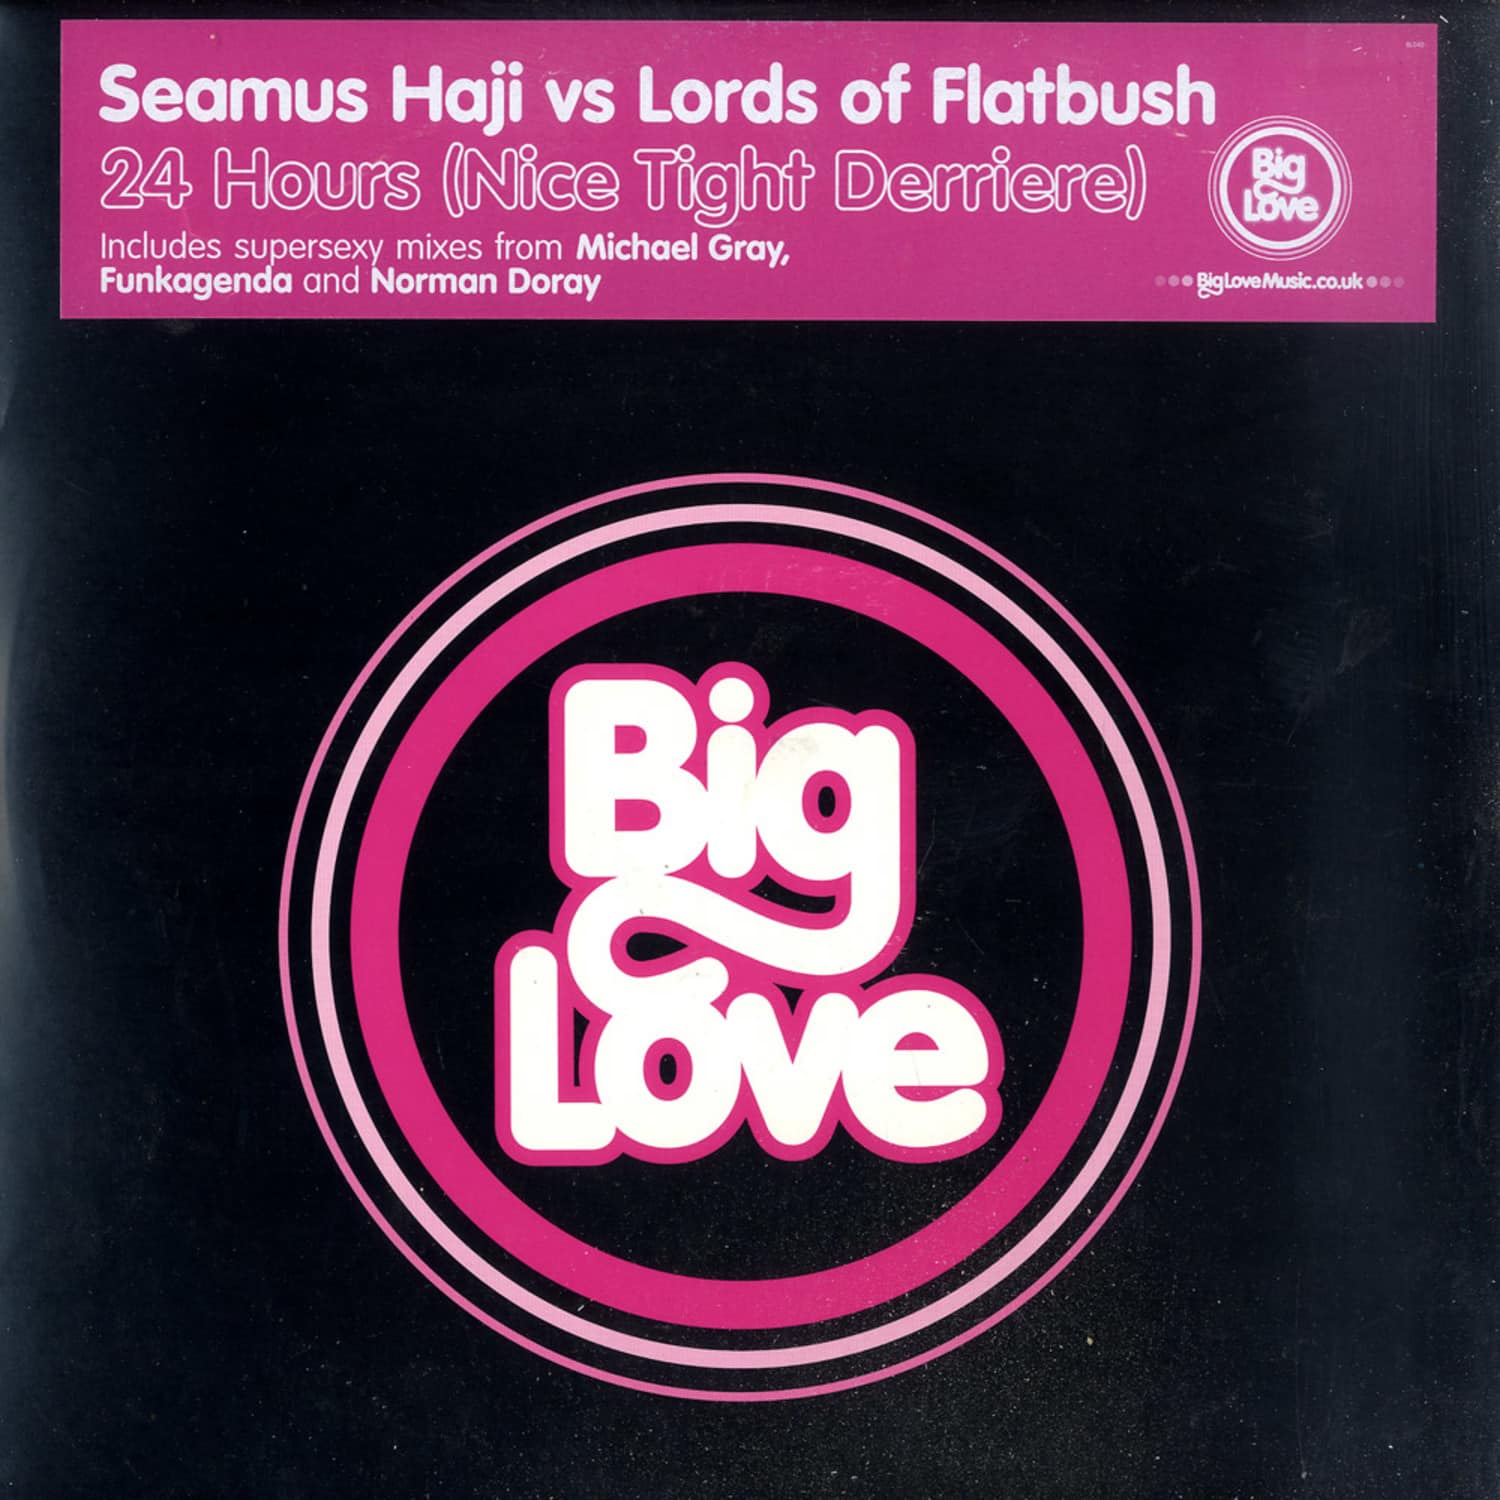 Seamus Haji vs. Lords of Flat - 24 HOURS